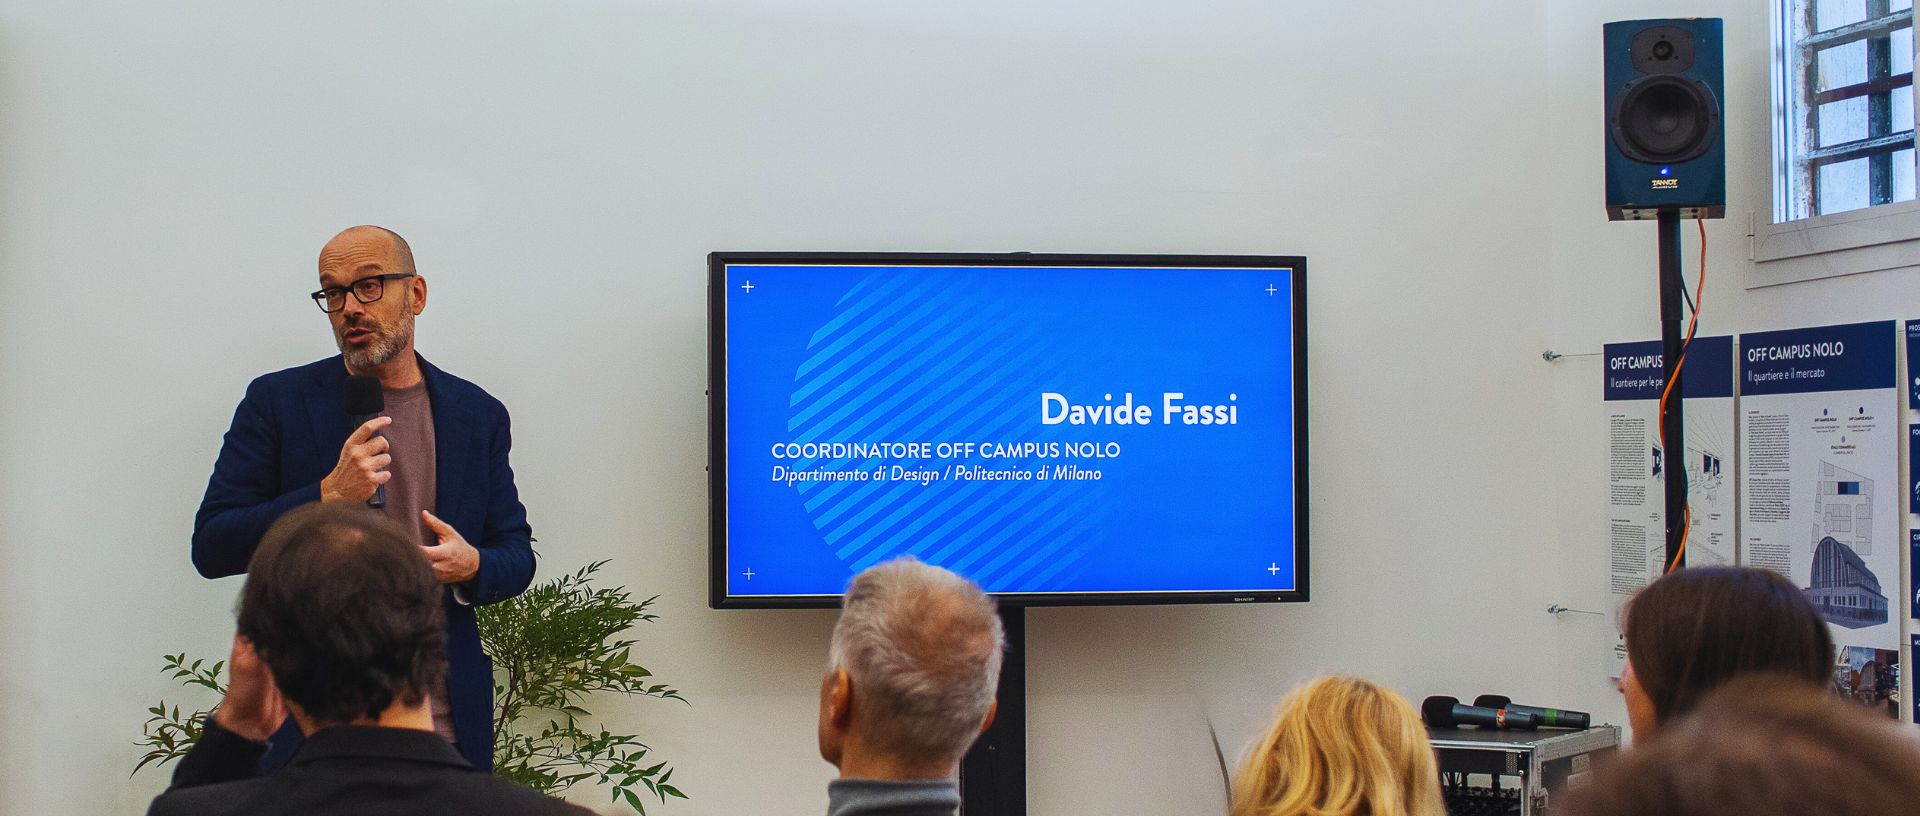 Davide Fassi